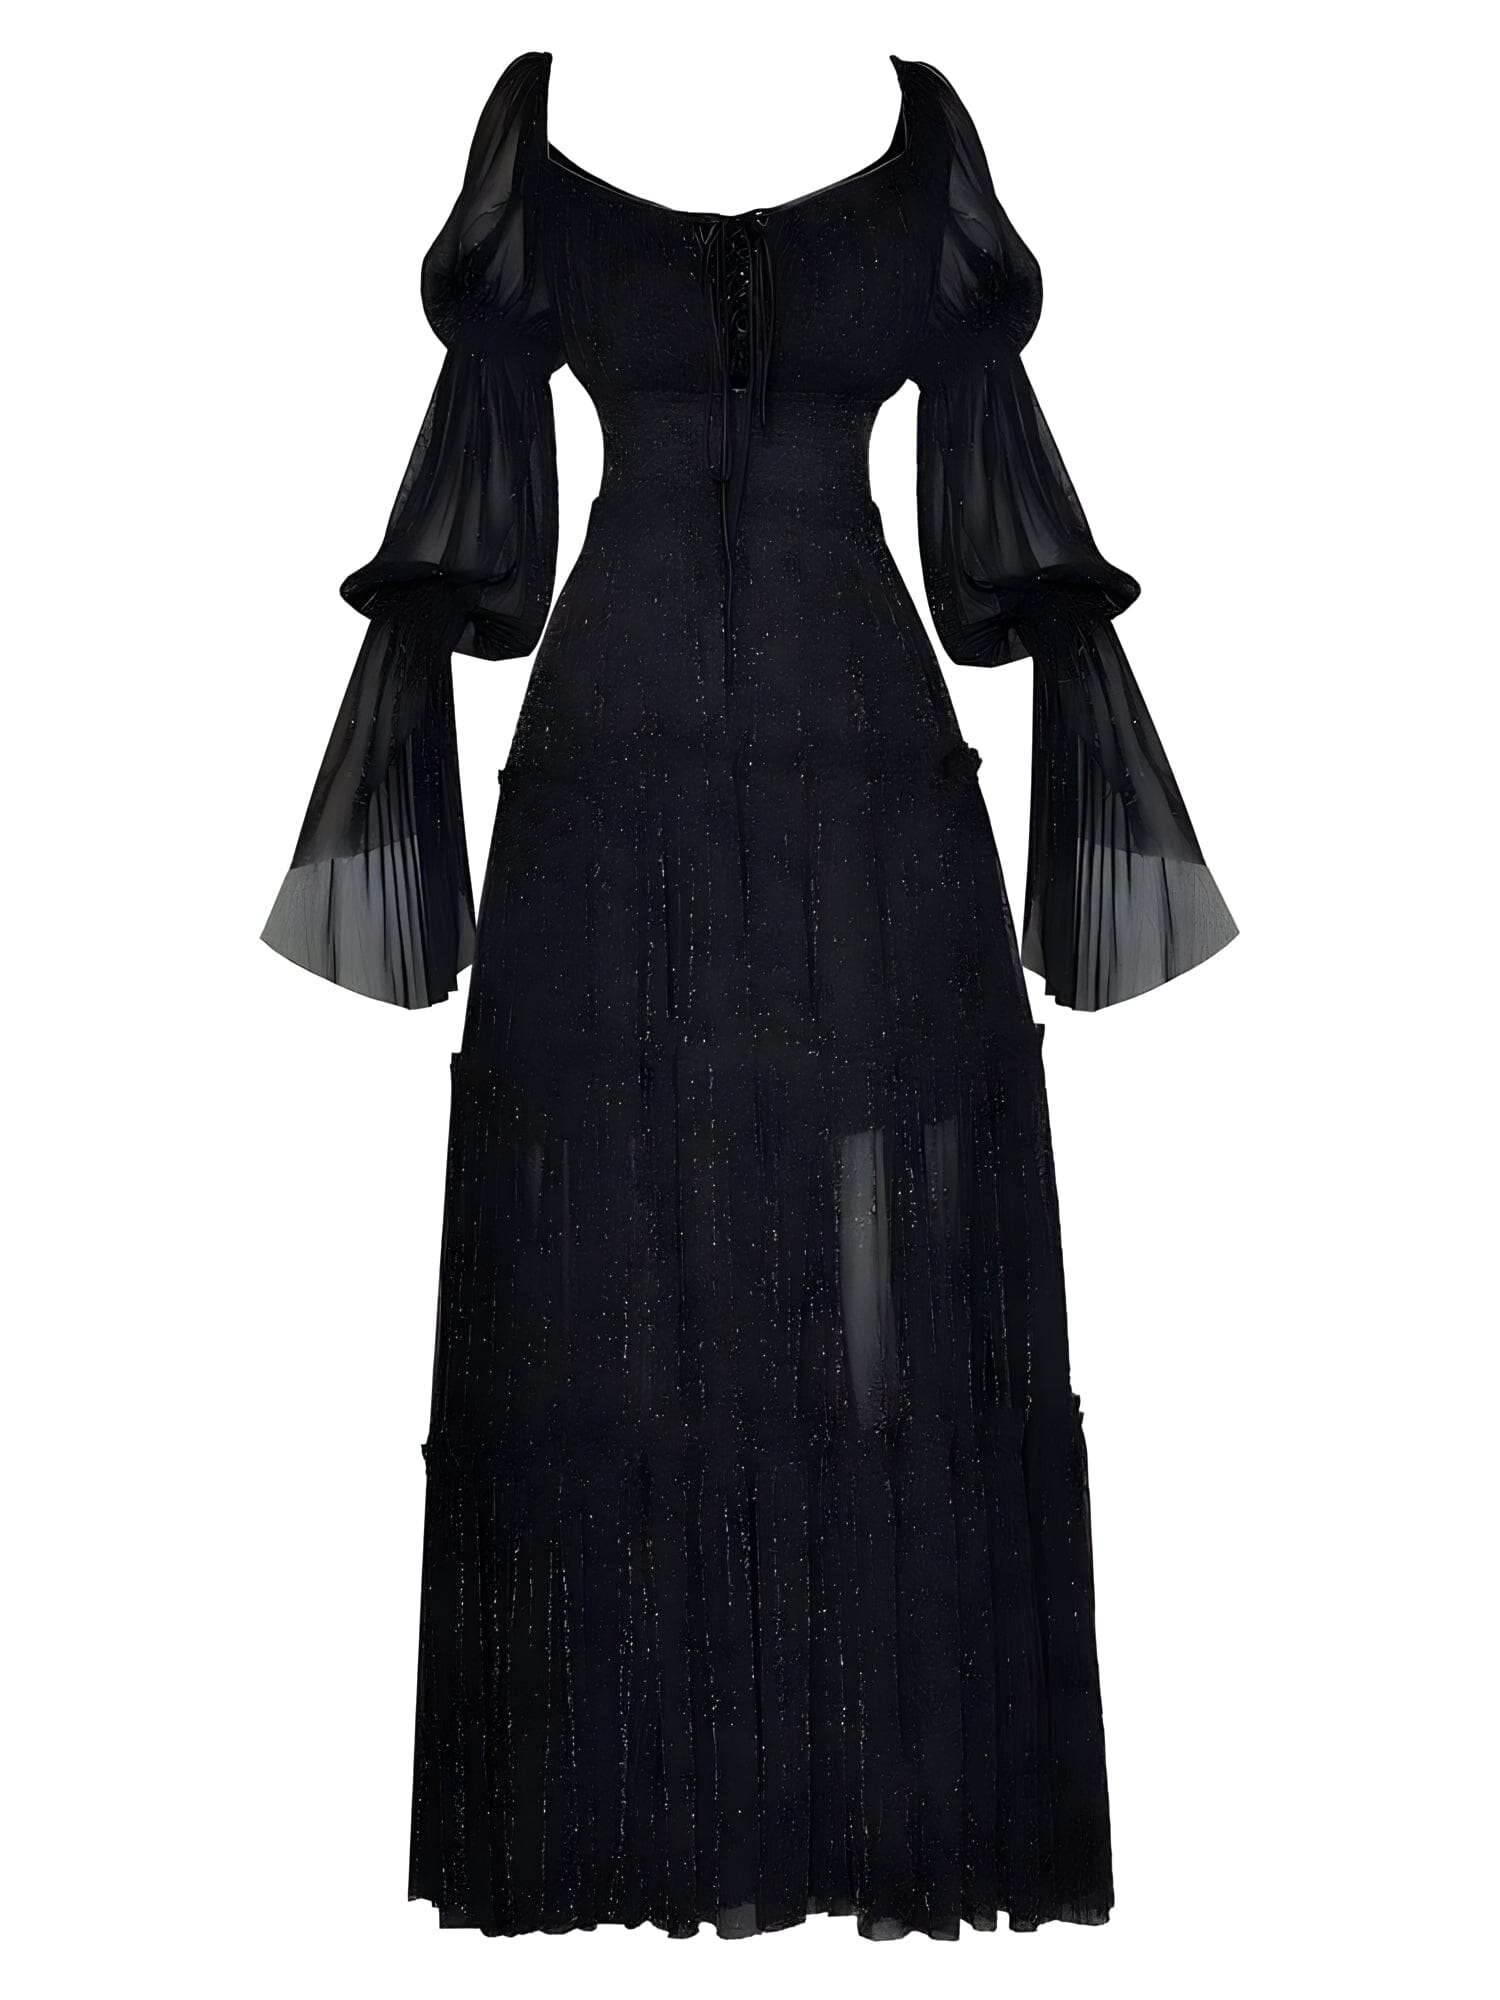 The Celestia Long Sleeve Dress - Multiple Colors 0 SA Styles Black S 